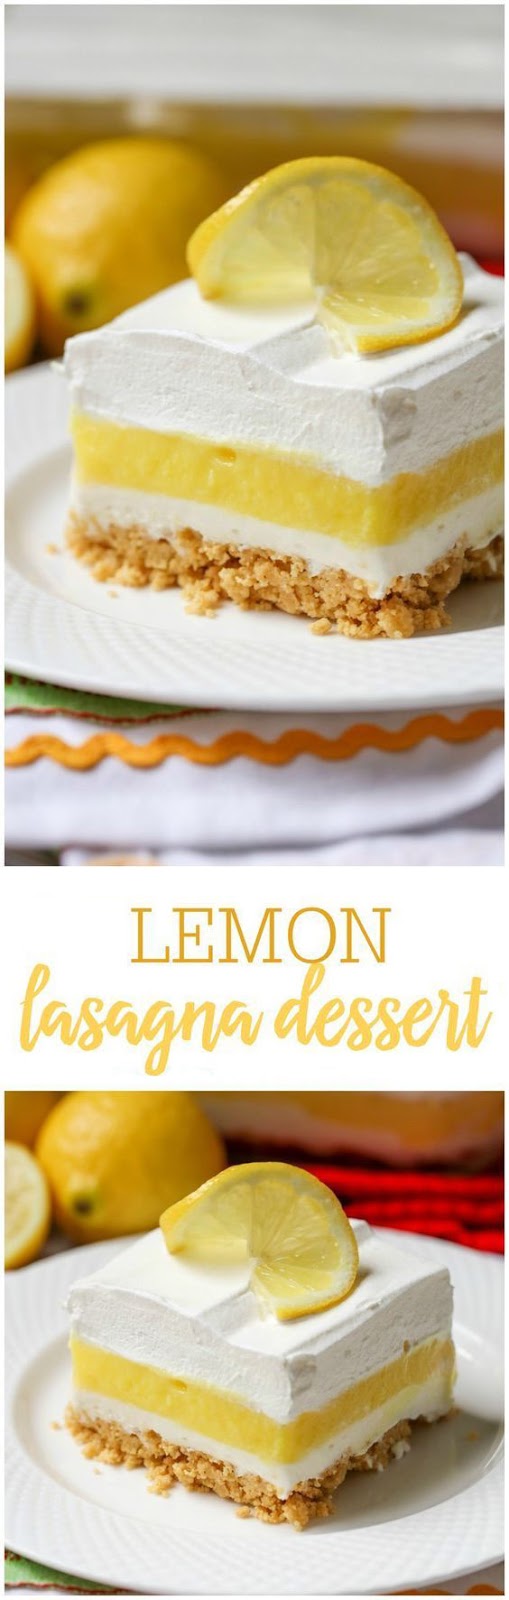 Lemon Lasagna Dessert